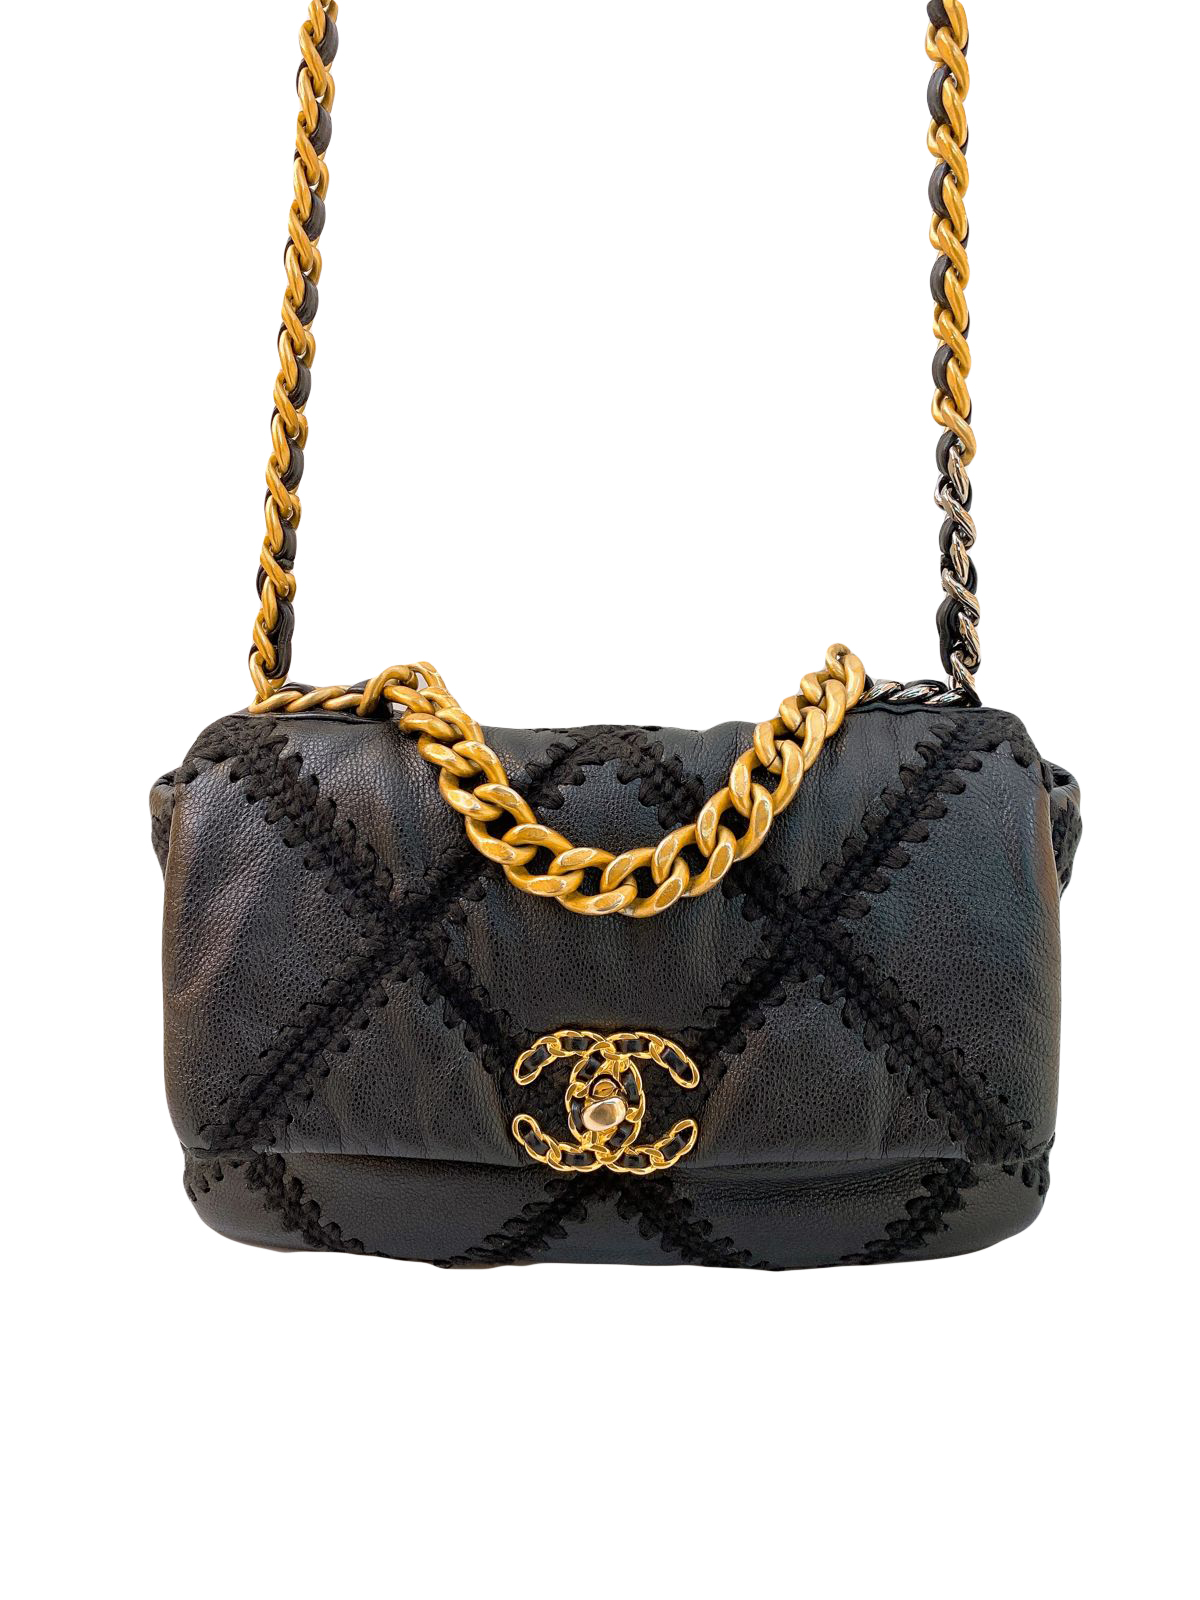 Chanel 19 leather handbag Chanel Black in Leather - 32621973